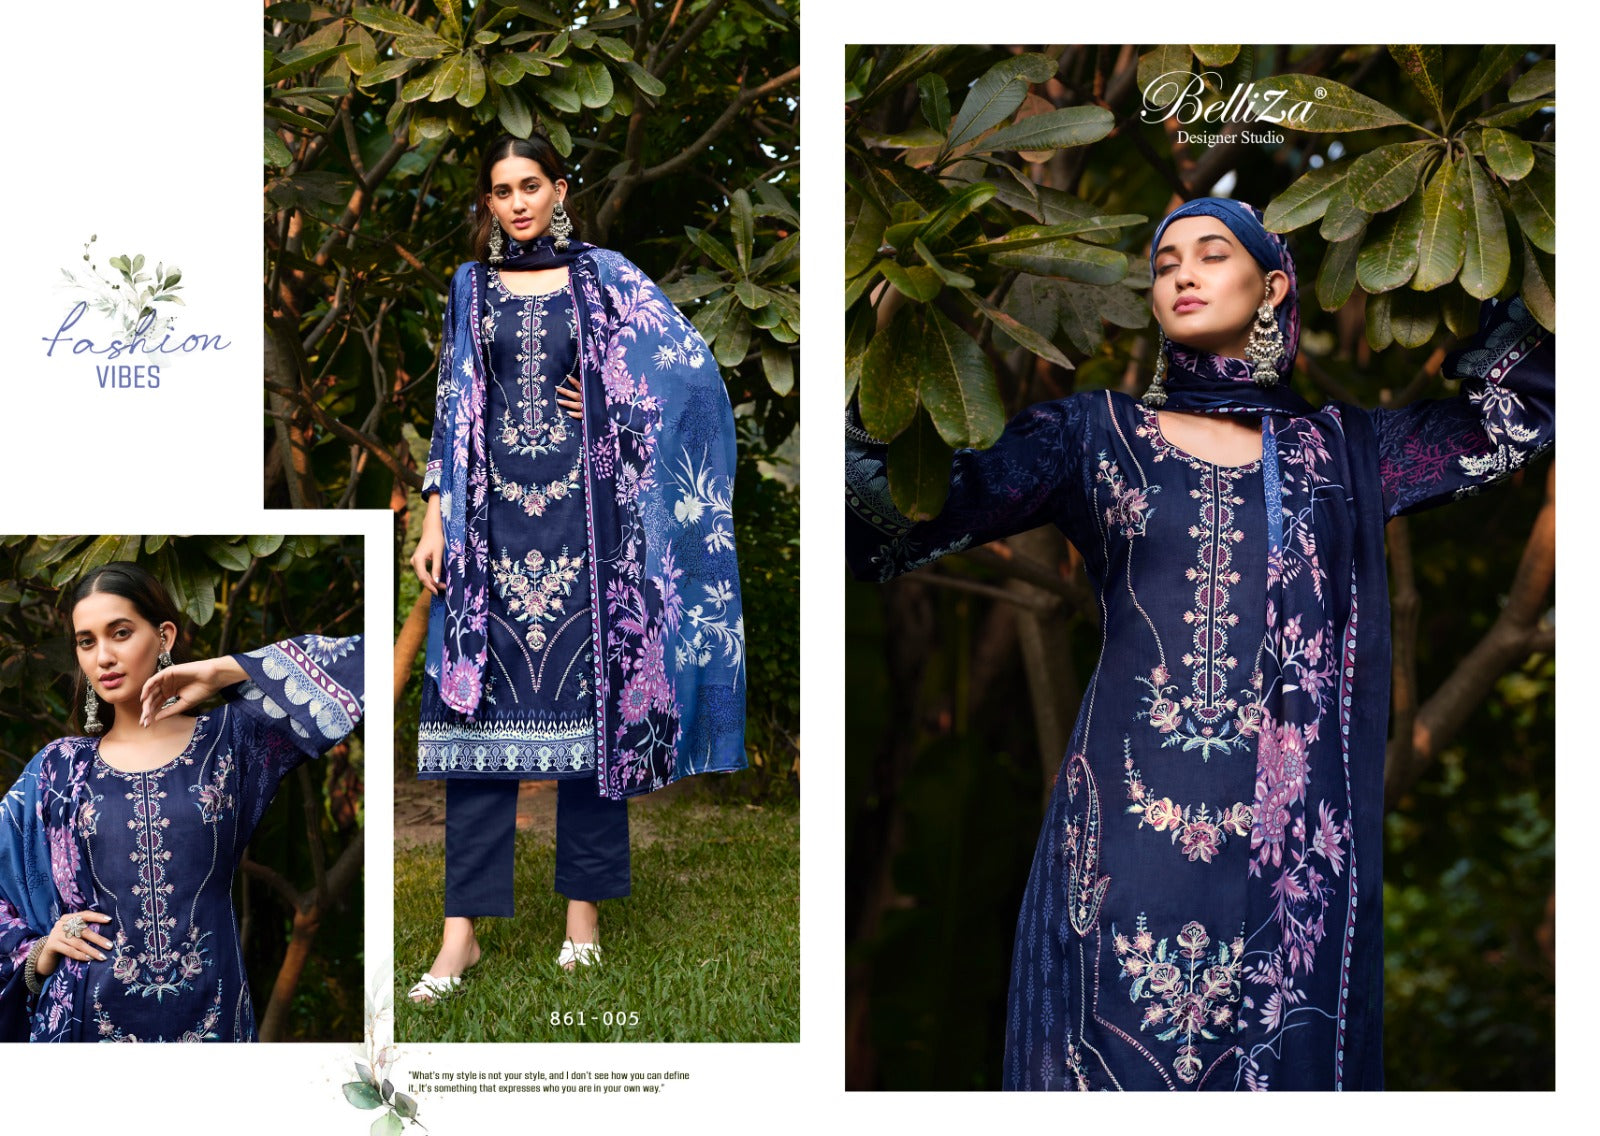 Belliza Designer Suits Lavanya Jam Cotton Digital Print With Embroidery Work Salwar Suit Latest Collection - jilaniwholesalesuit